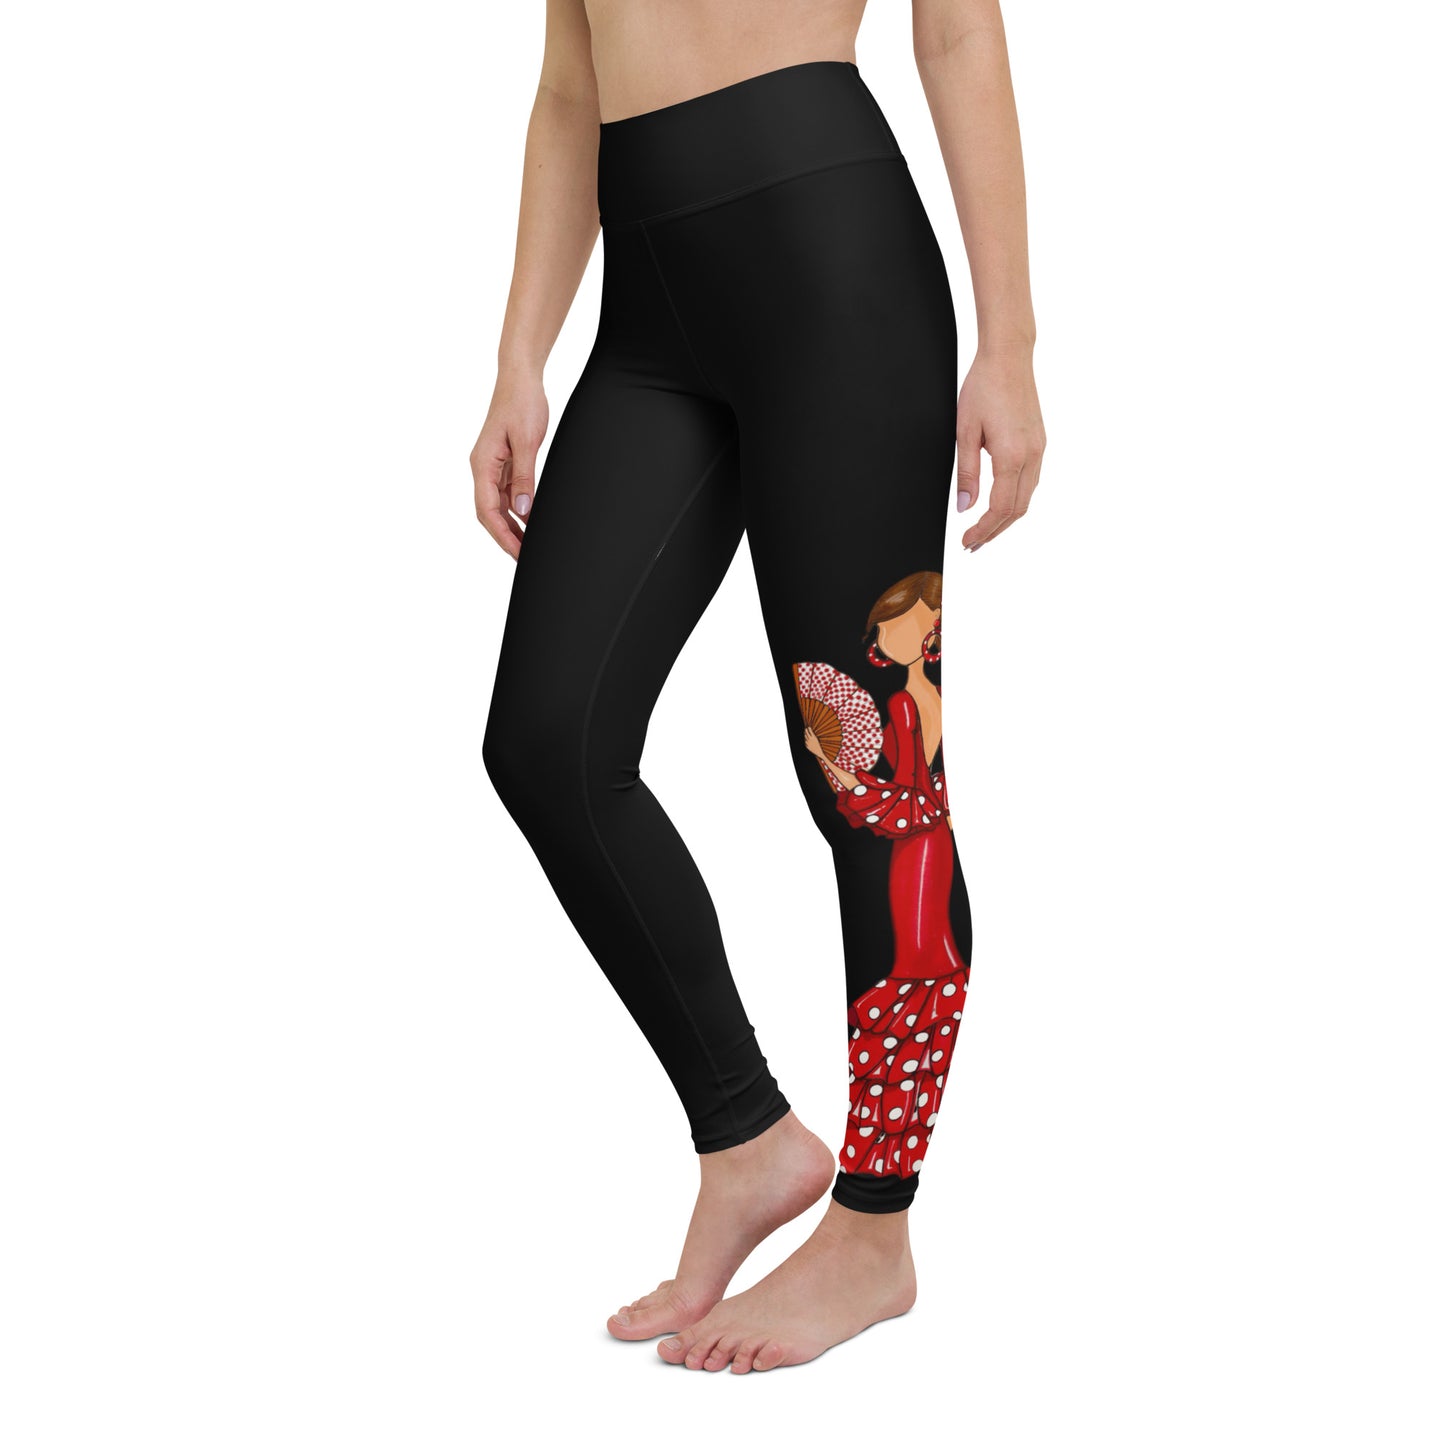 Flamenco Dancer Leggings, black high waisted yoga leggings with a red dress and a hand fan design - IllustrArte